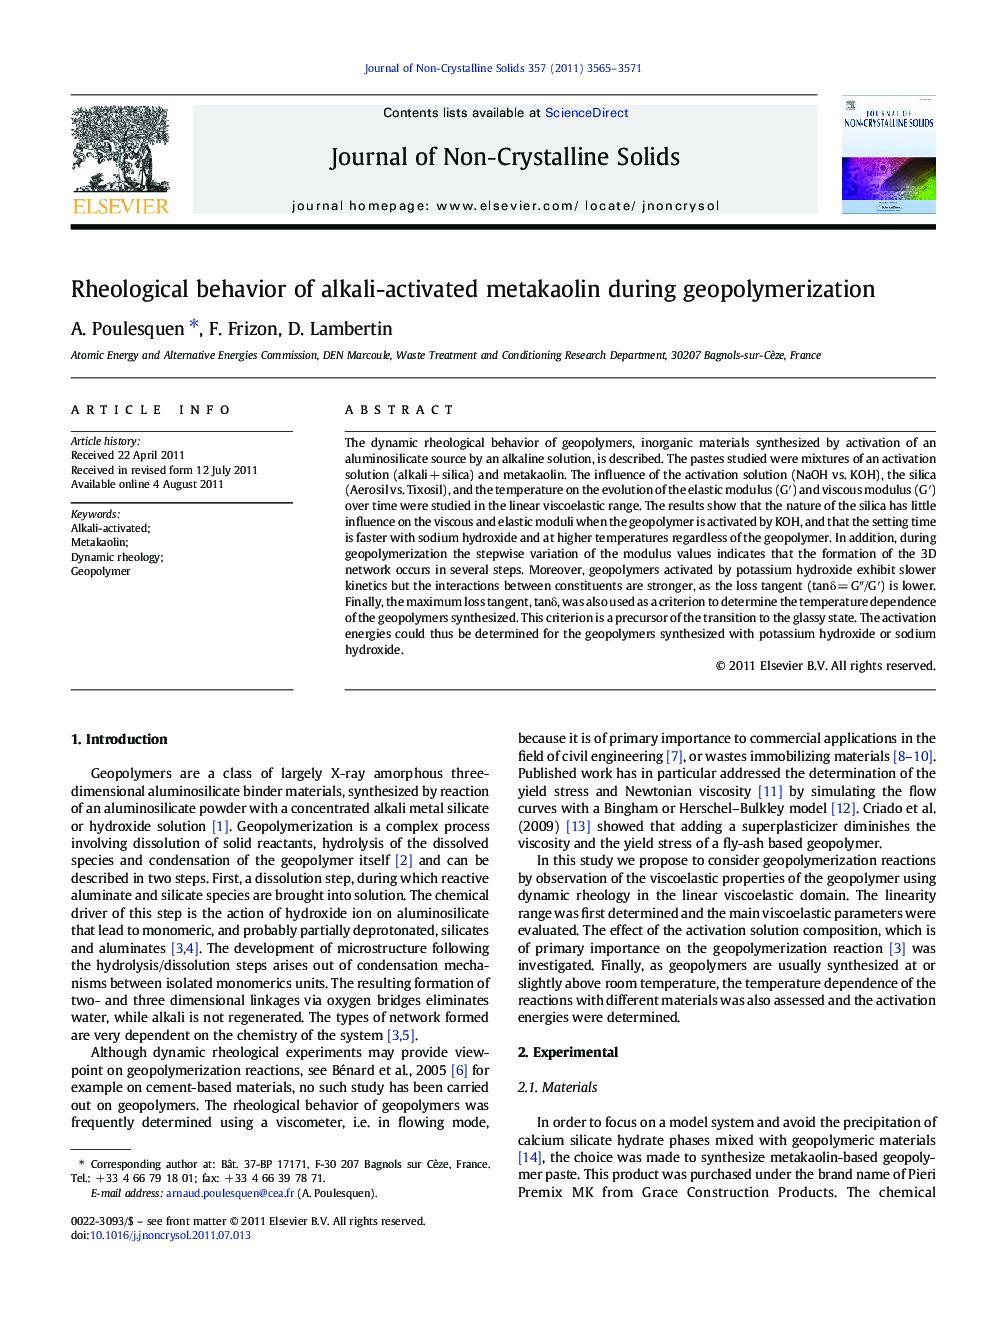 Rheological behavior of alkali-activated metakaolin during geopolymerization